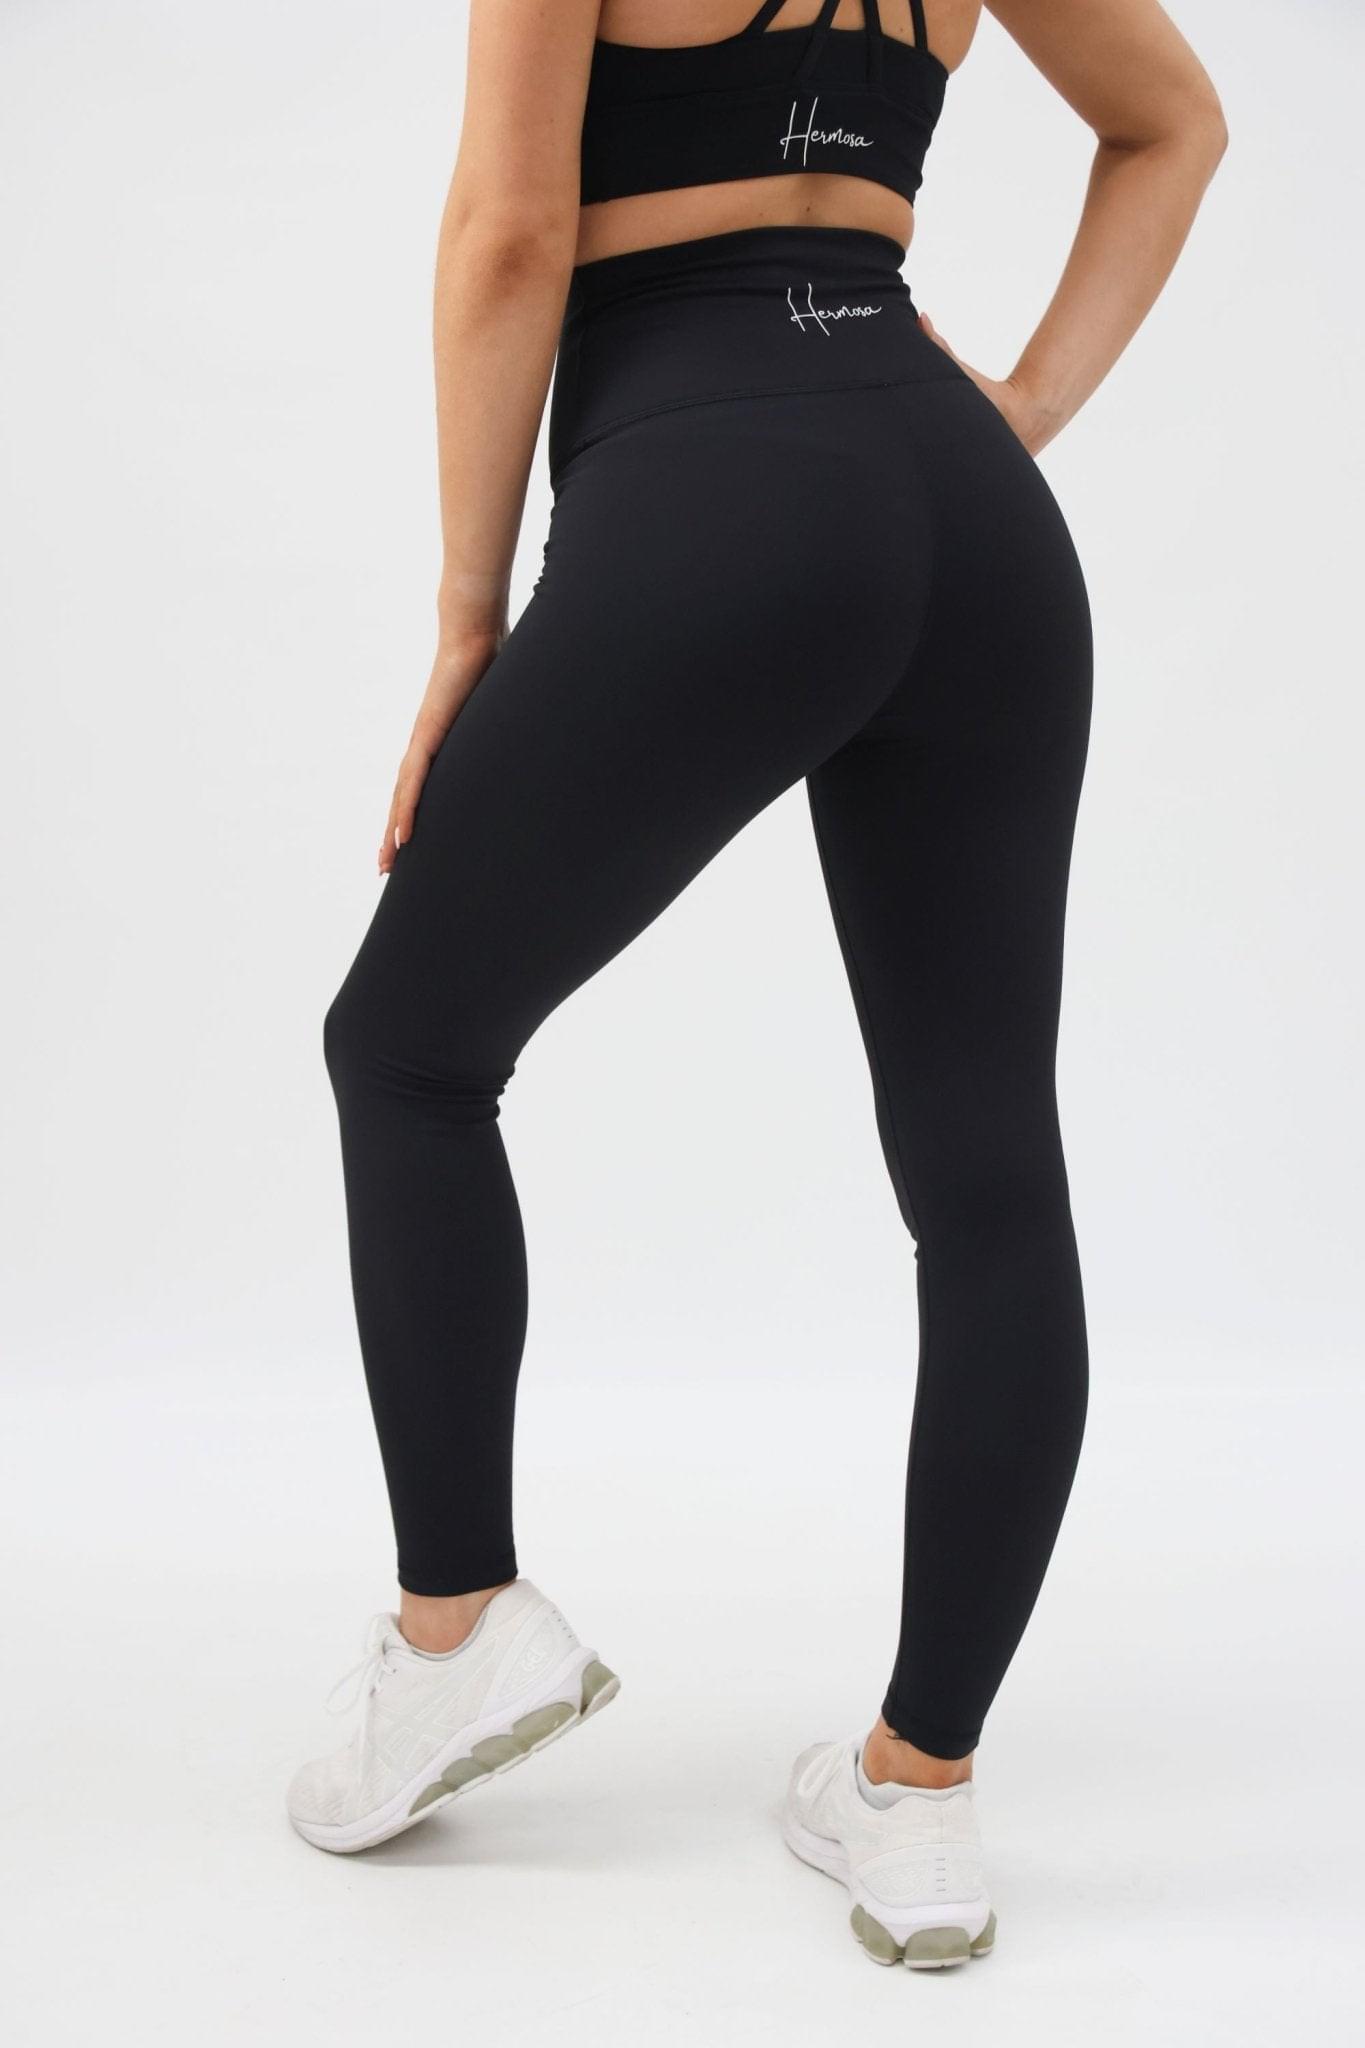 the luna leggings effect🍑😅 buy 1 get 1 free while stocks last! #gym